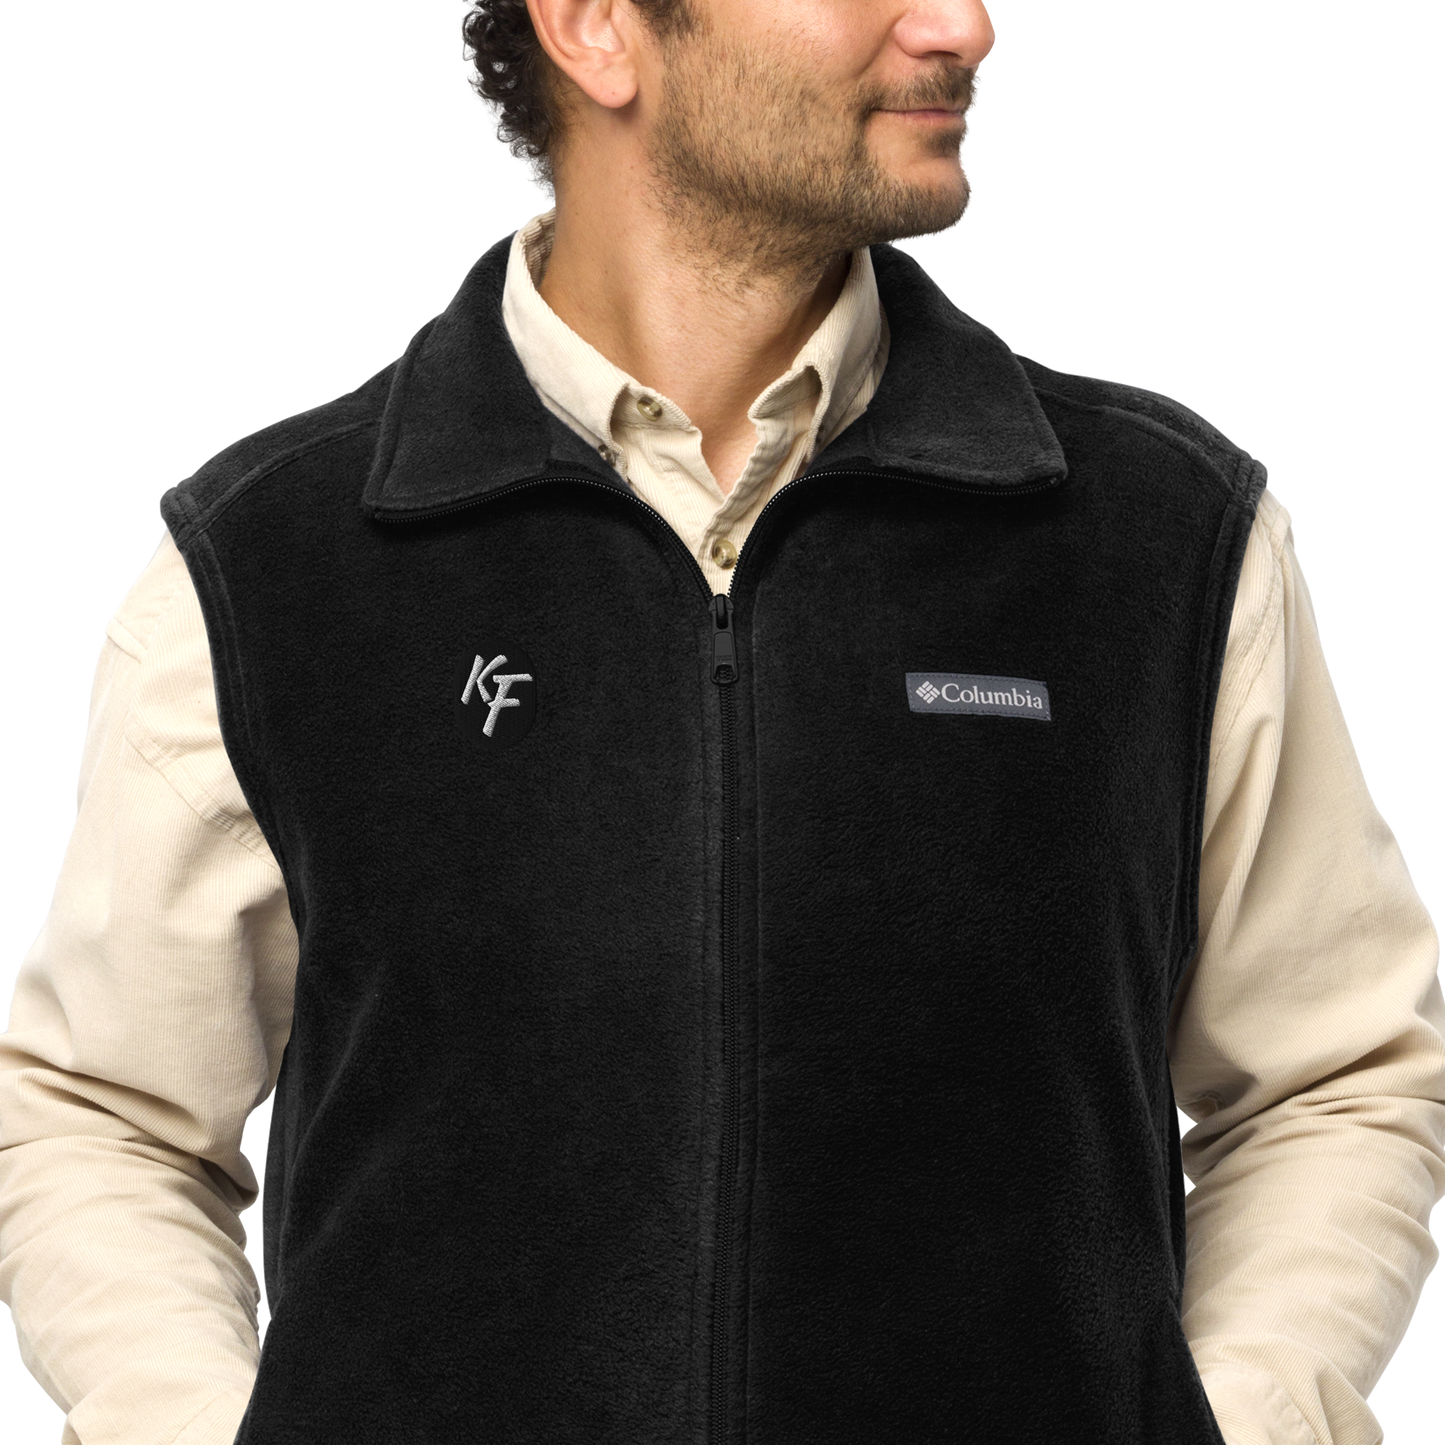 Kentucky Fried X Columbia fleece vest